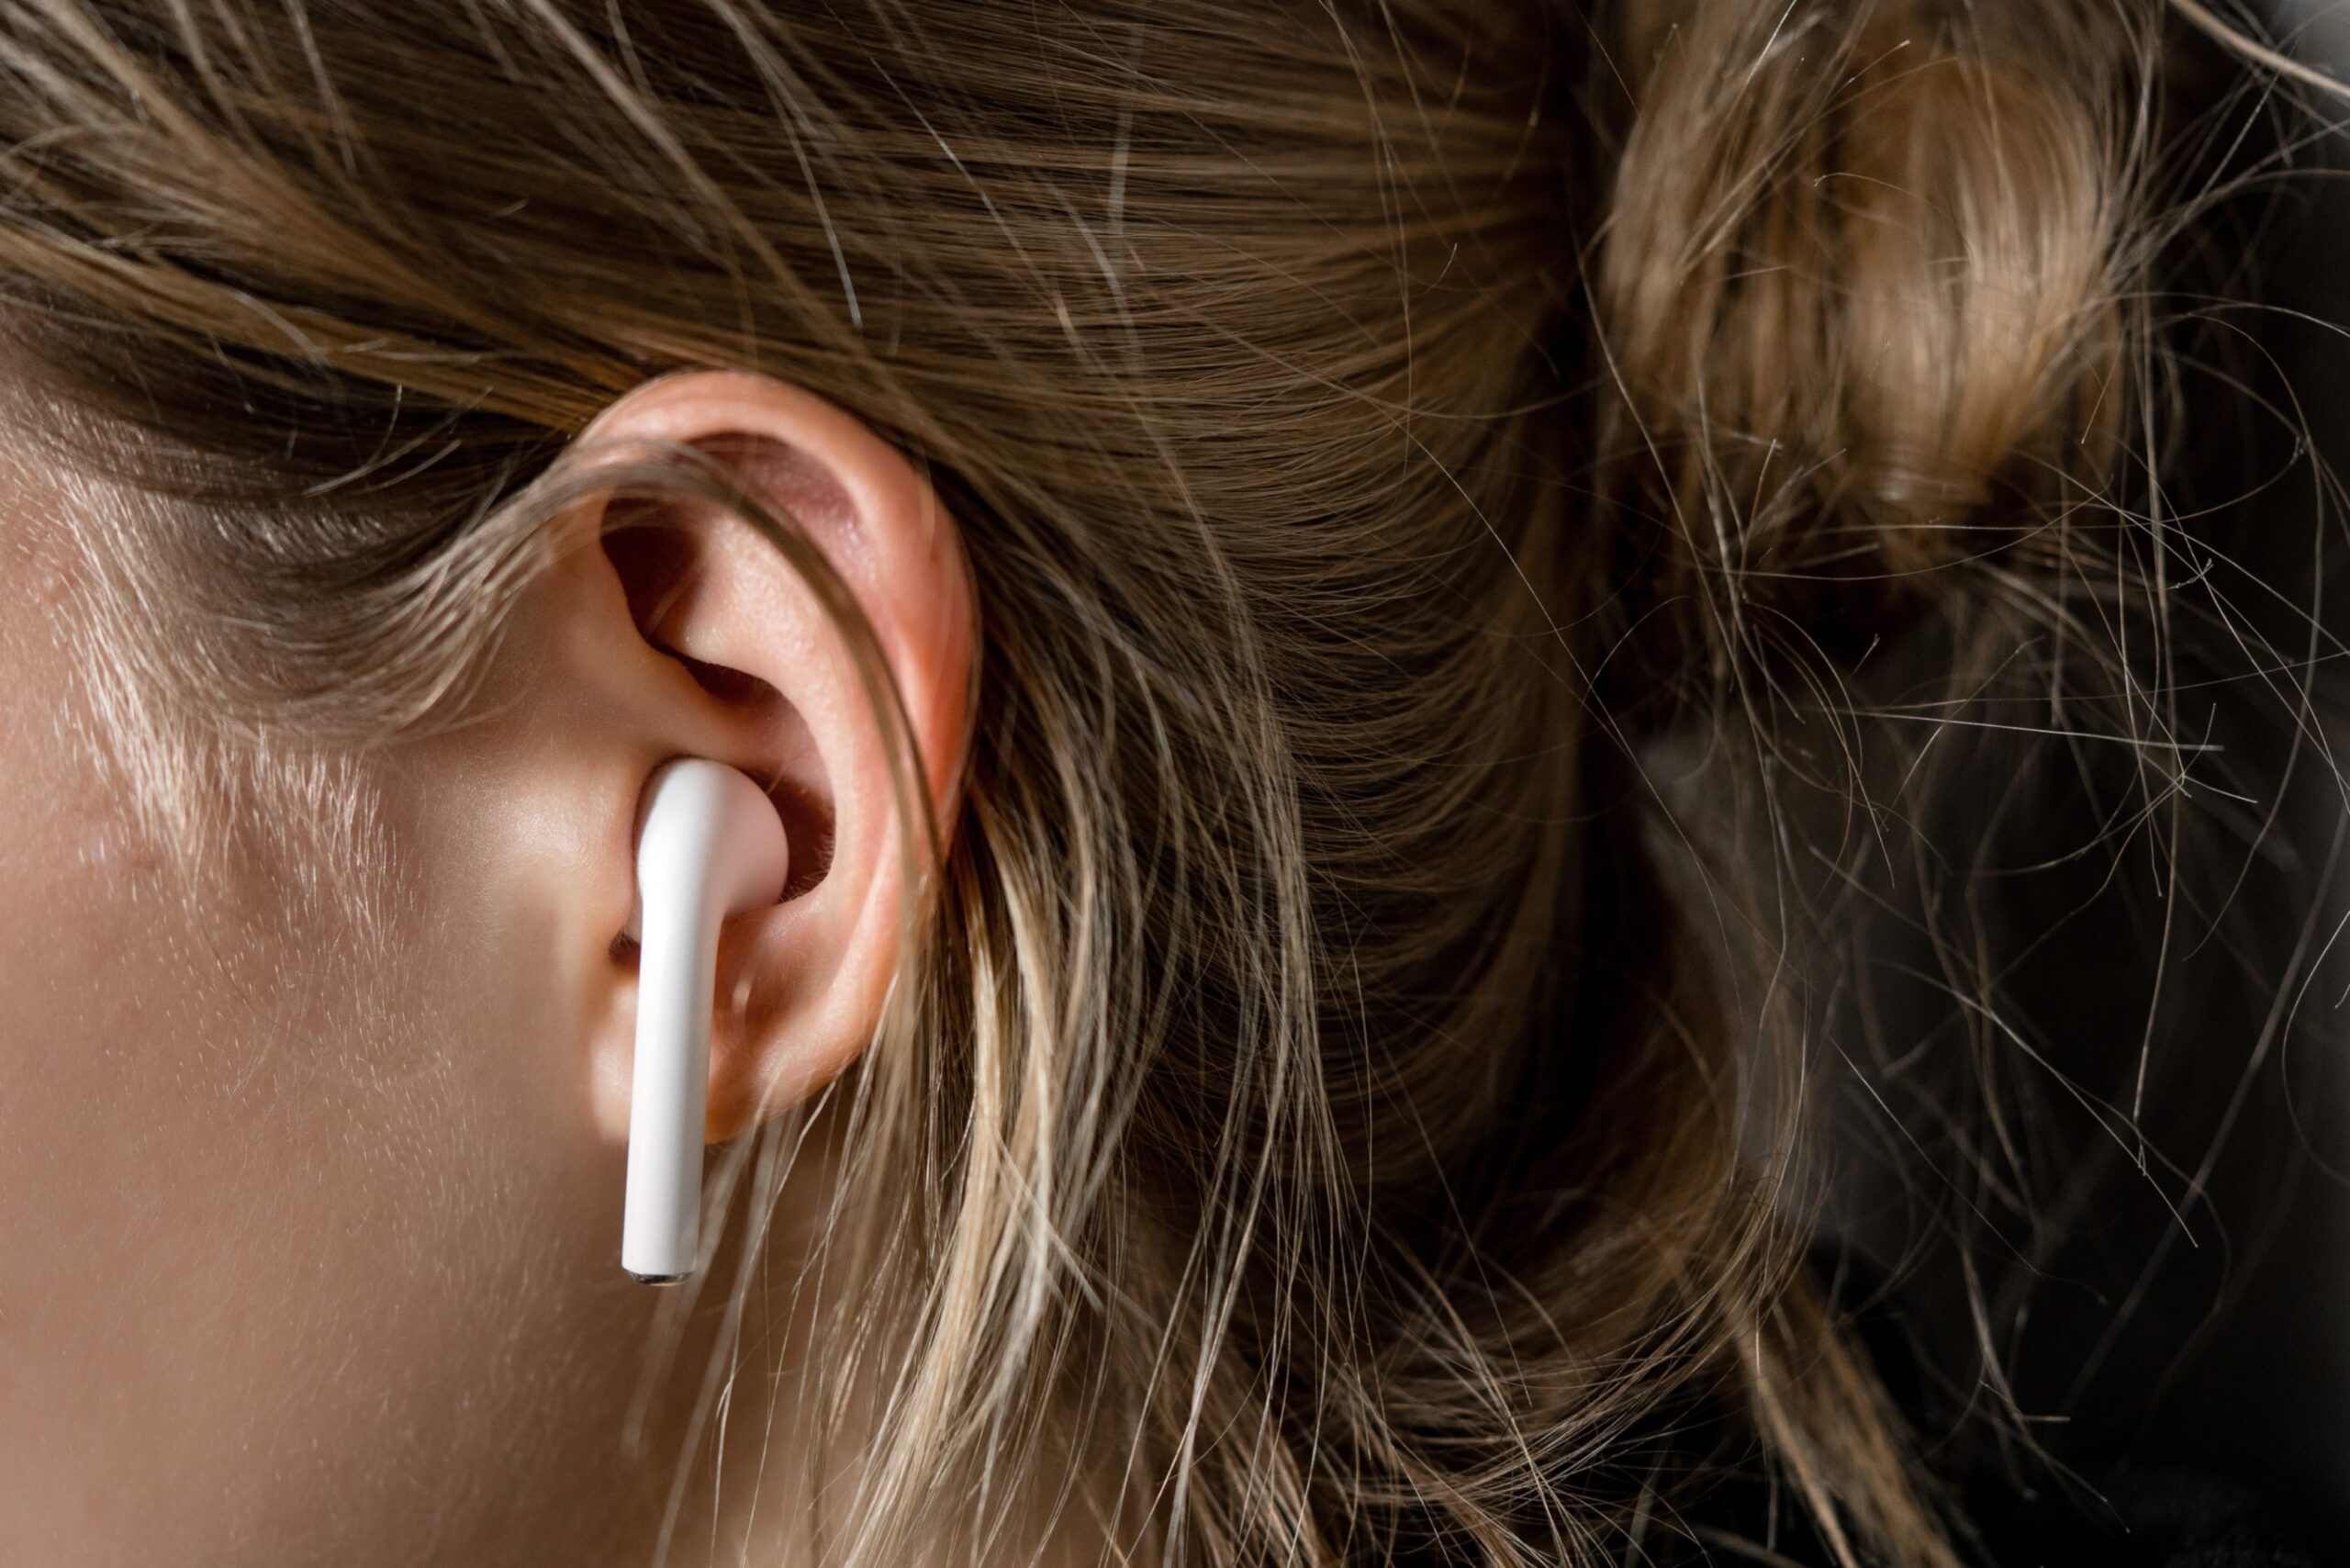 Are Wireless Earphones Dangerous To The Brain?